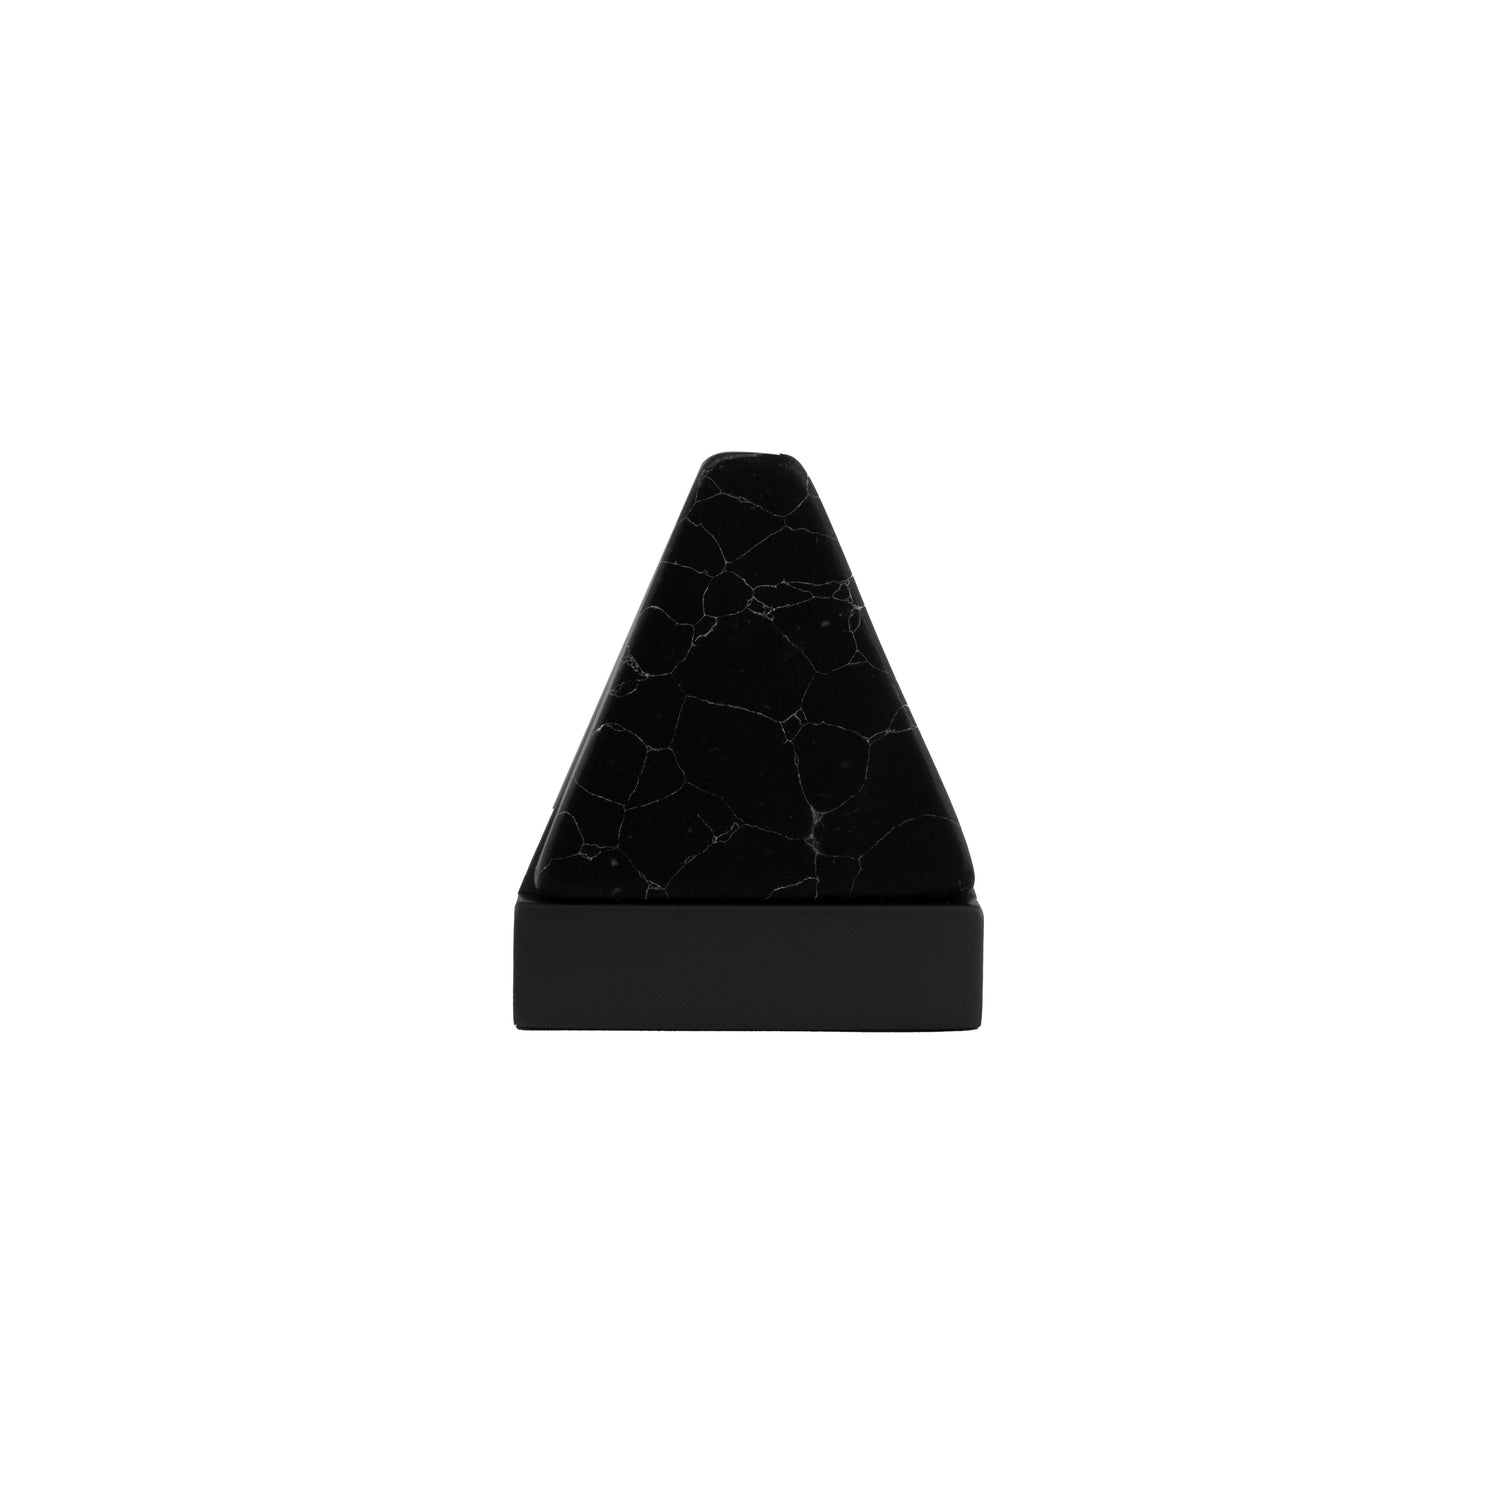 Gable Knob Knob 36mm / Black / Zinc Alloy - M A N T A R A